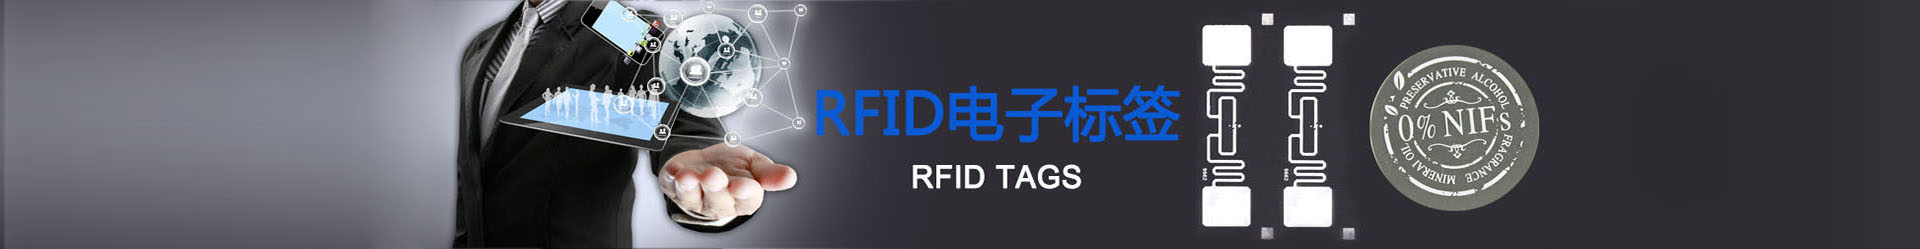 rfid服装标签